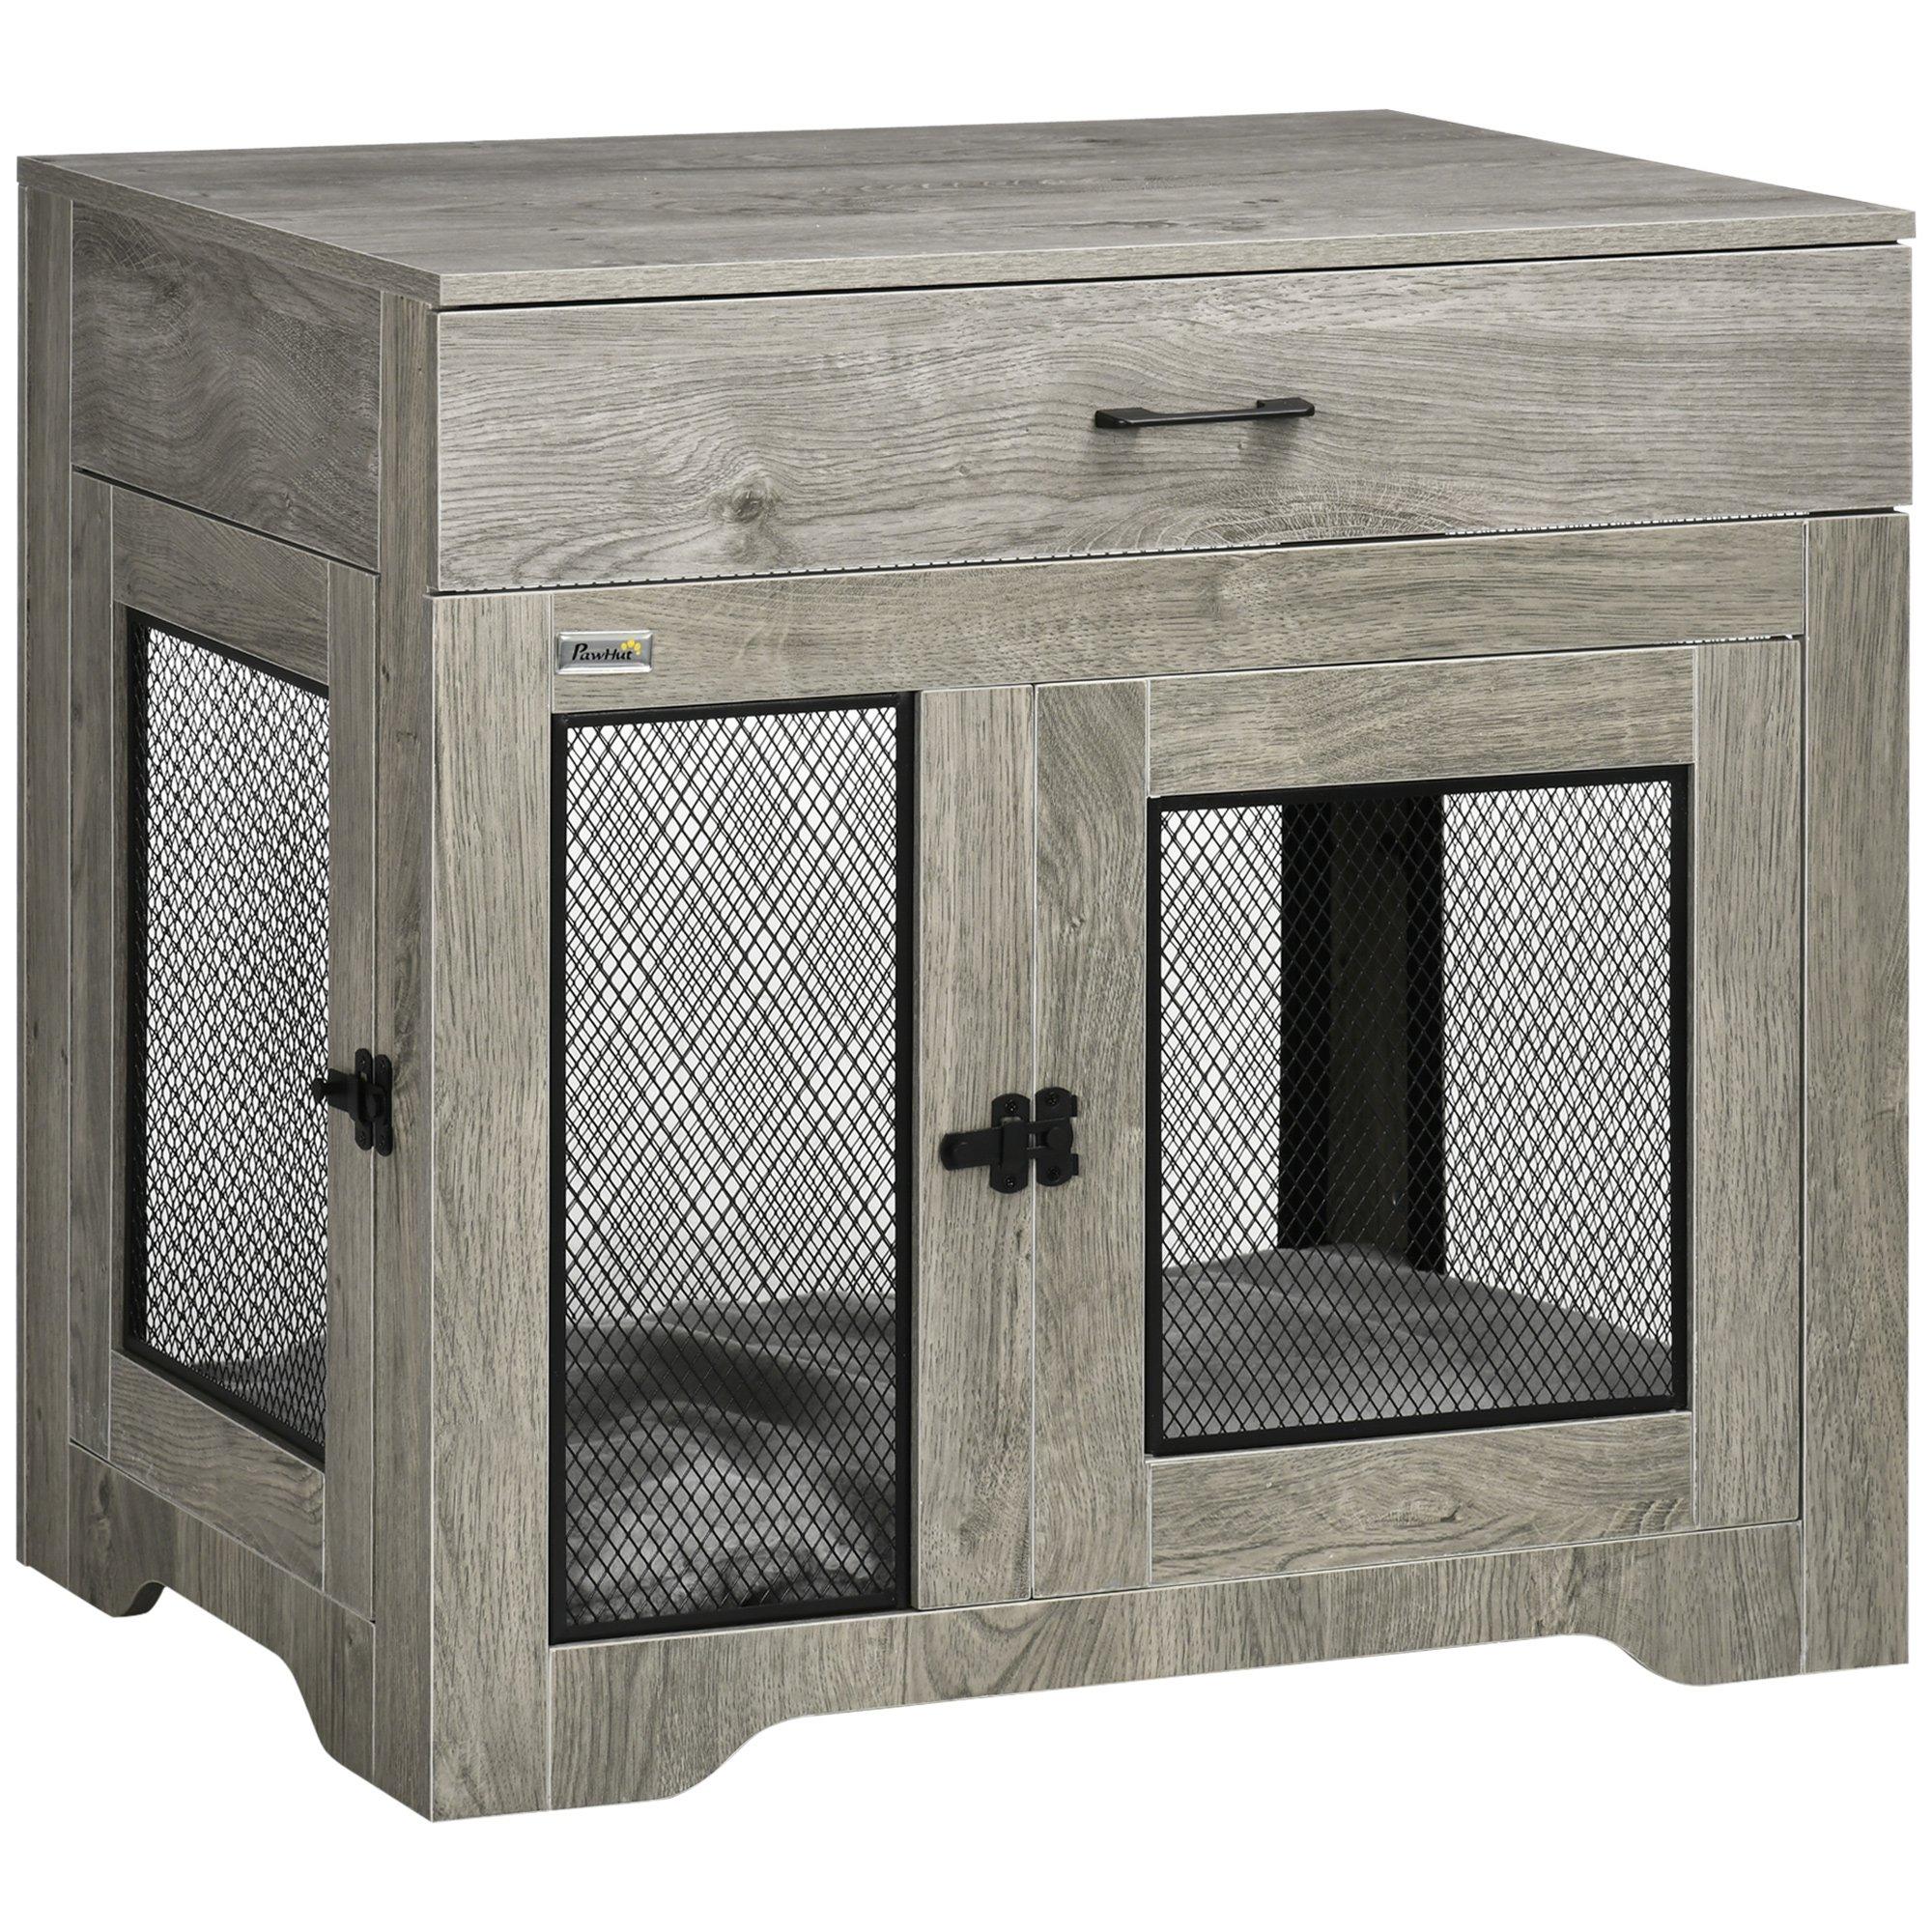 Double-Door Dog Furniture Crate, for Medium Dogs, Indoor Use - Grey